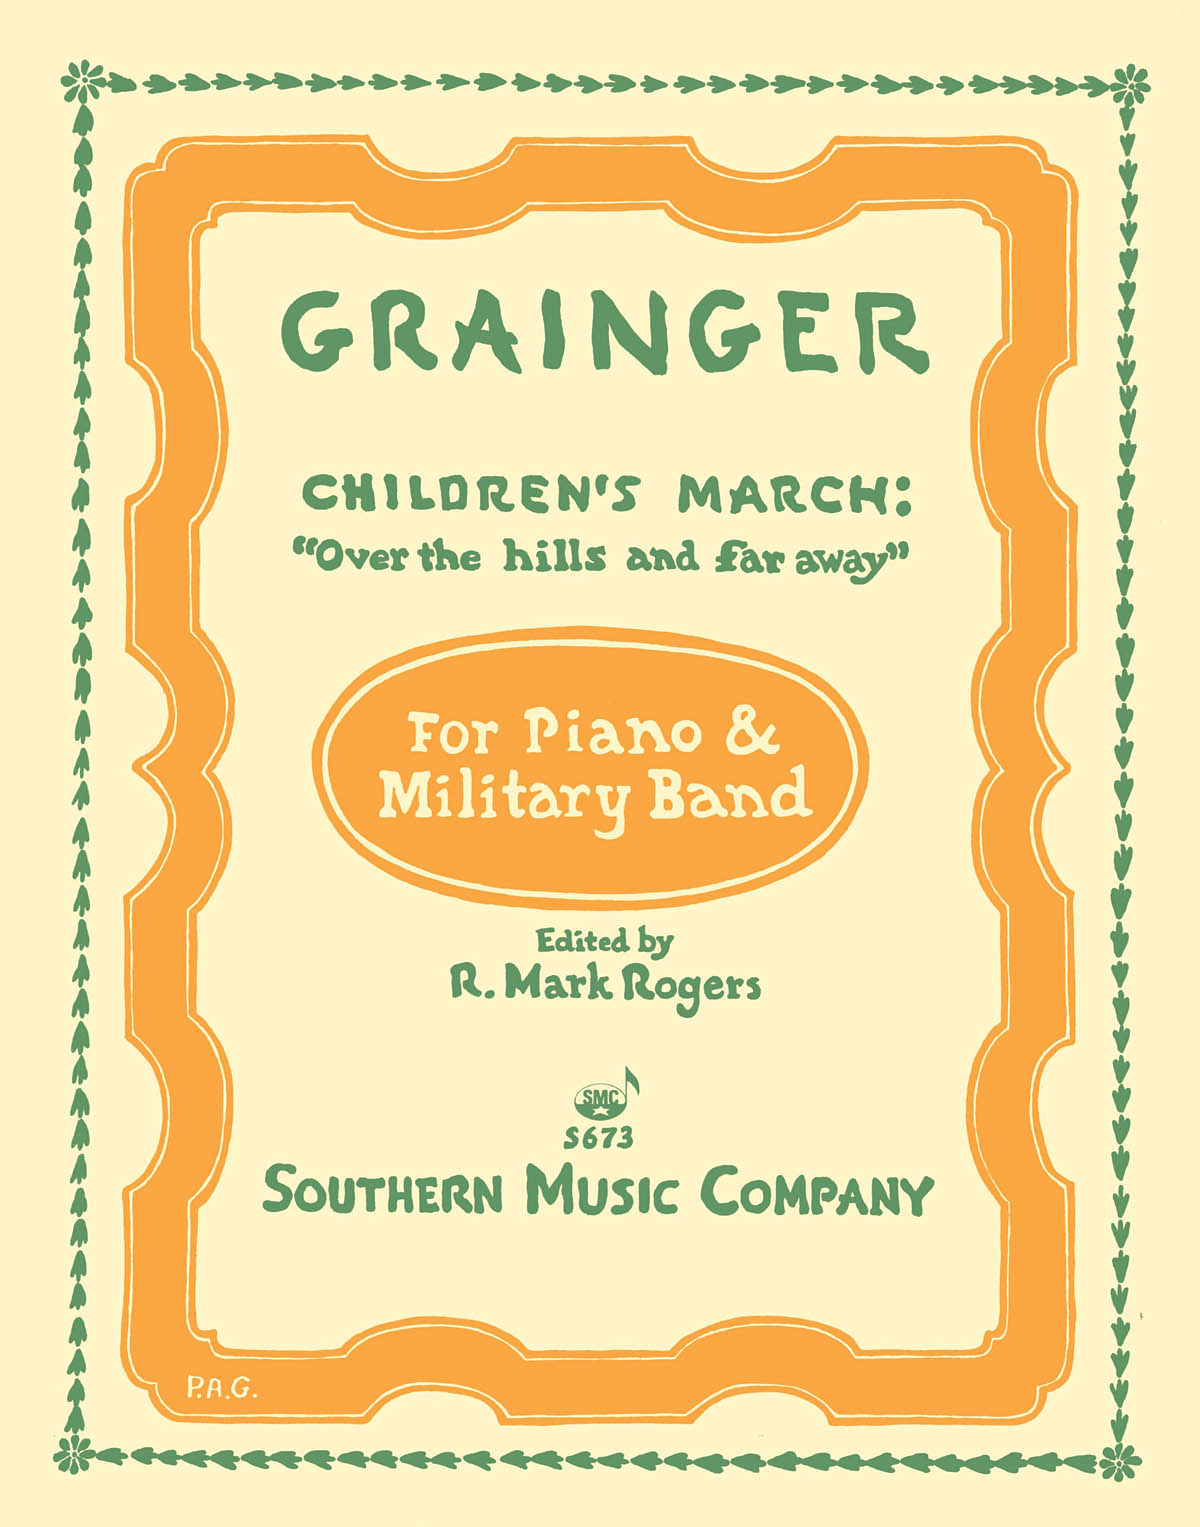 Percy Aldridge Grainger: Children's March - Over the Hills and Far Away: Concert